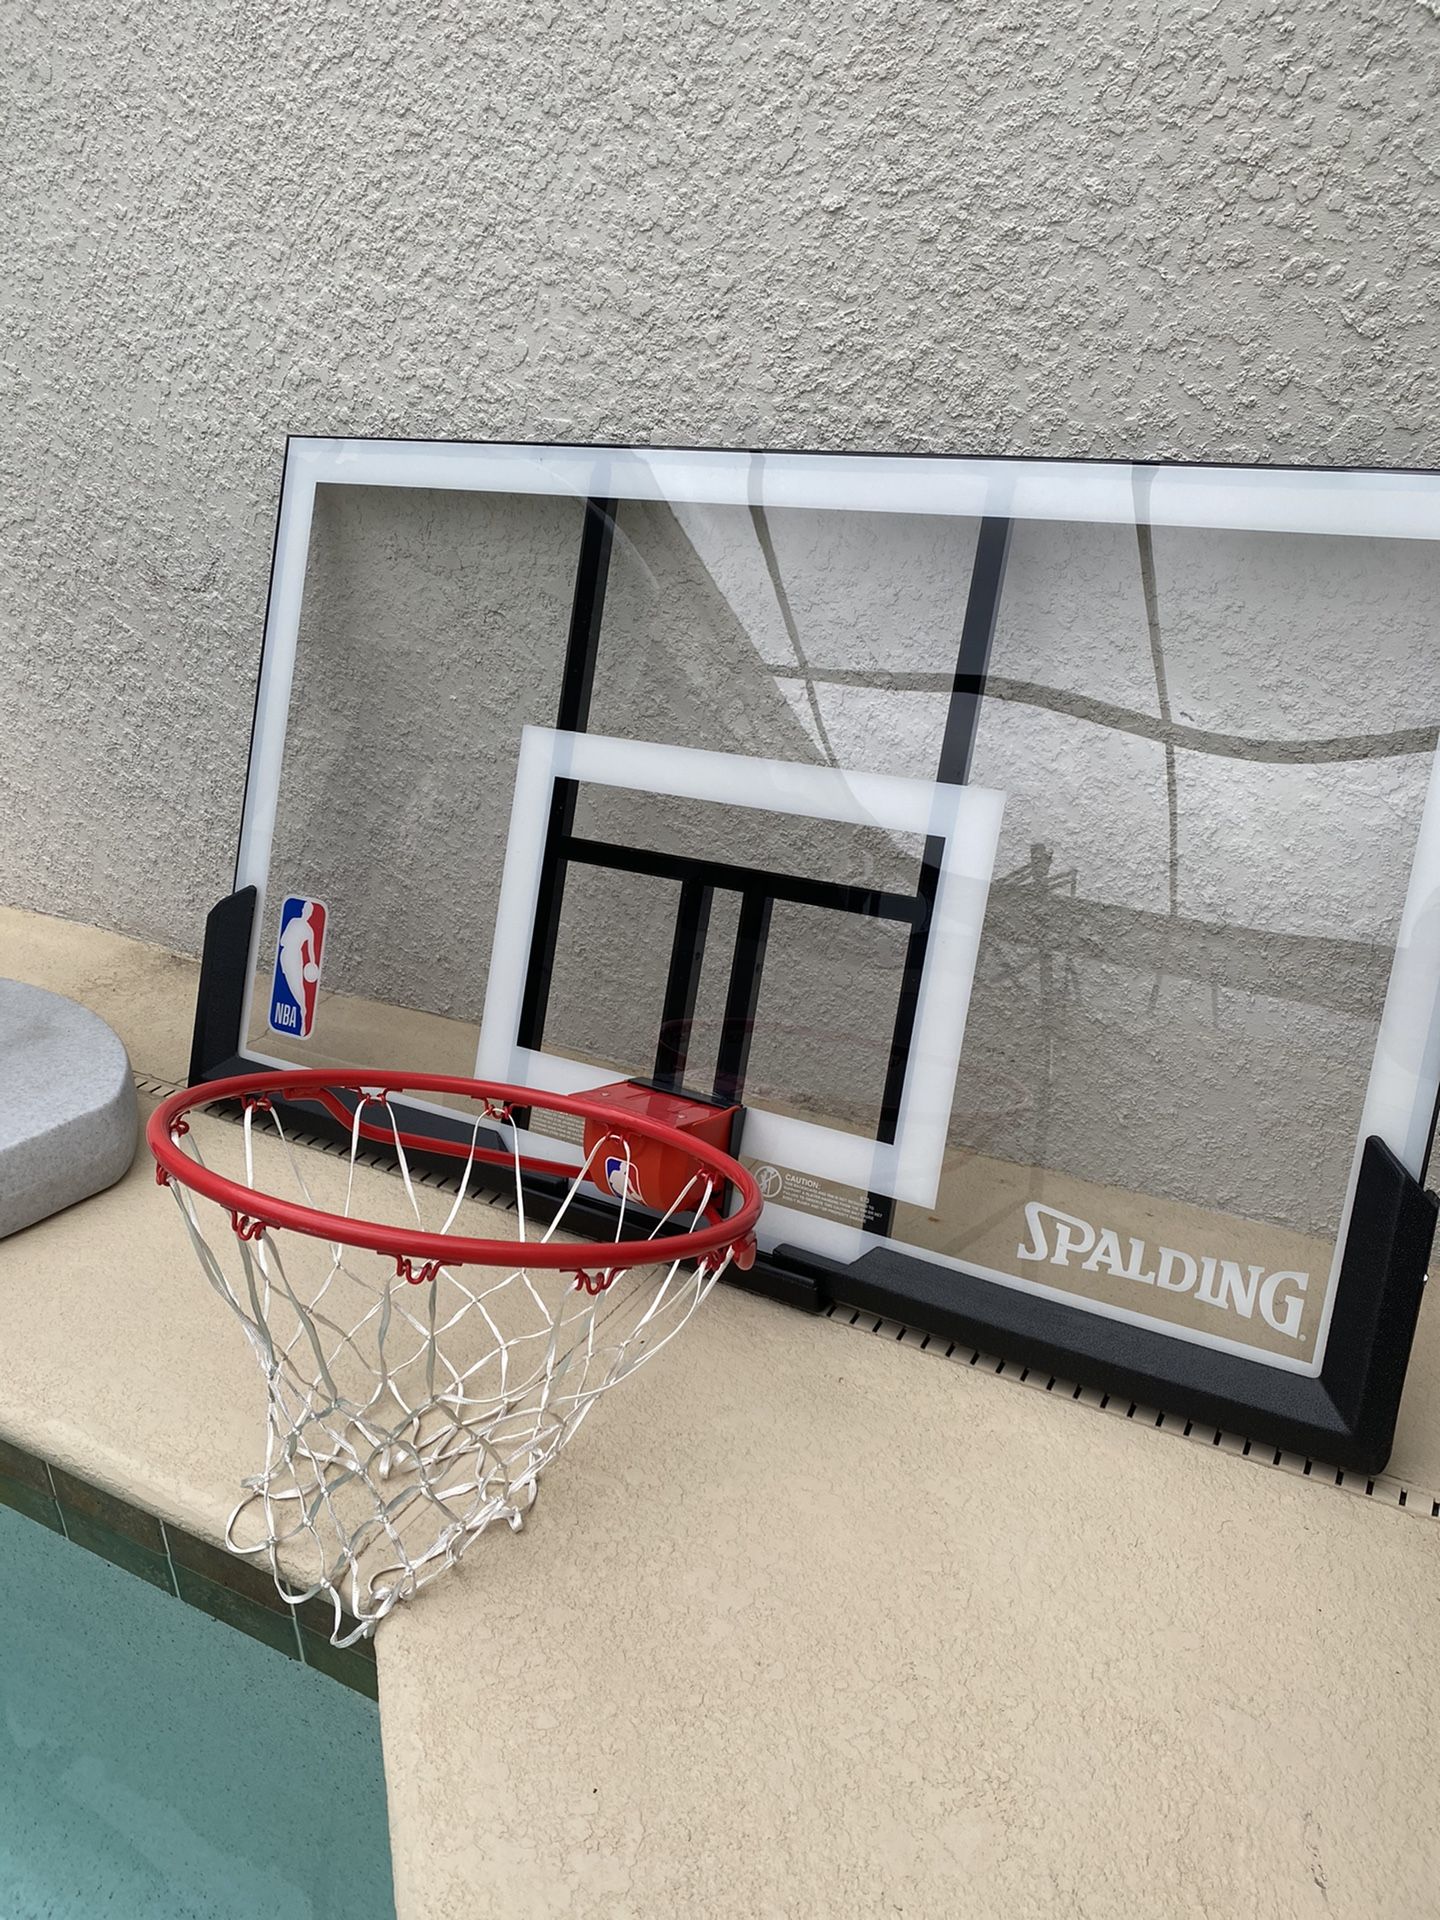 Nba Spalding basketball hoop